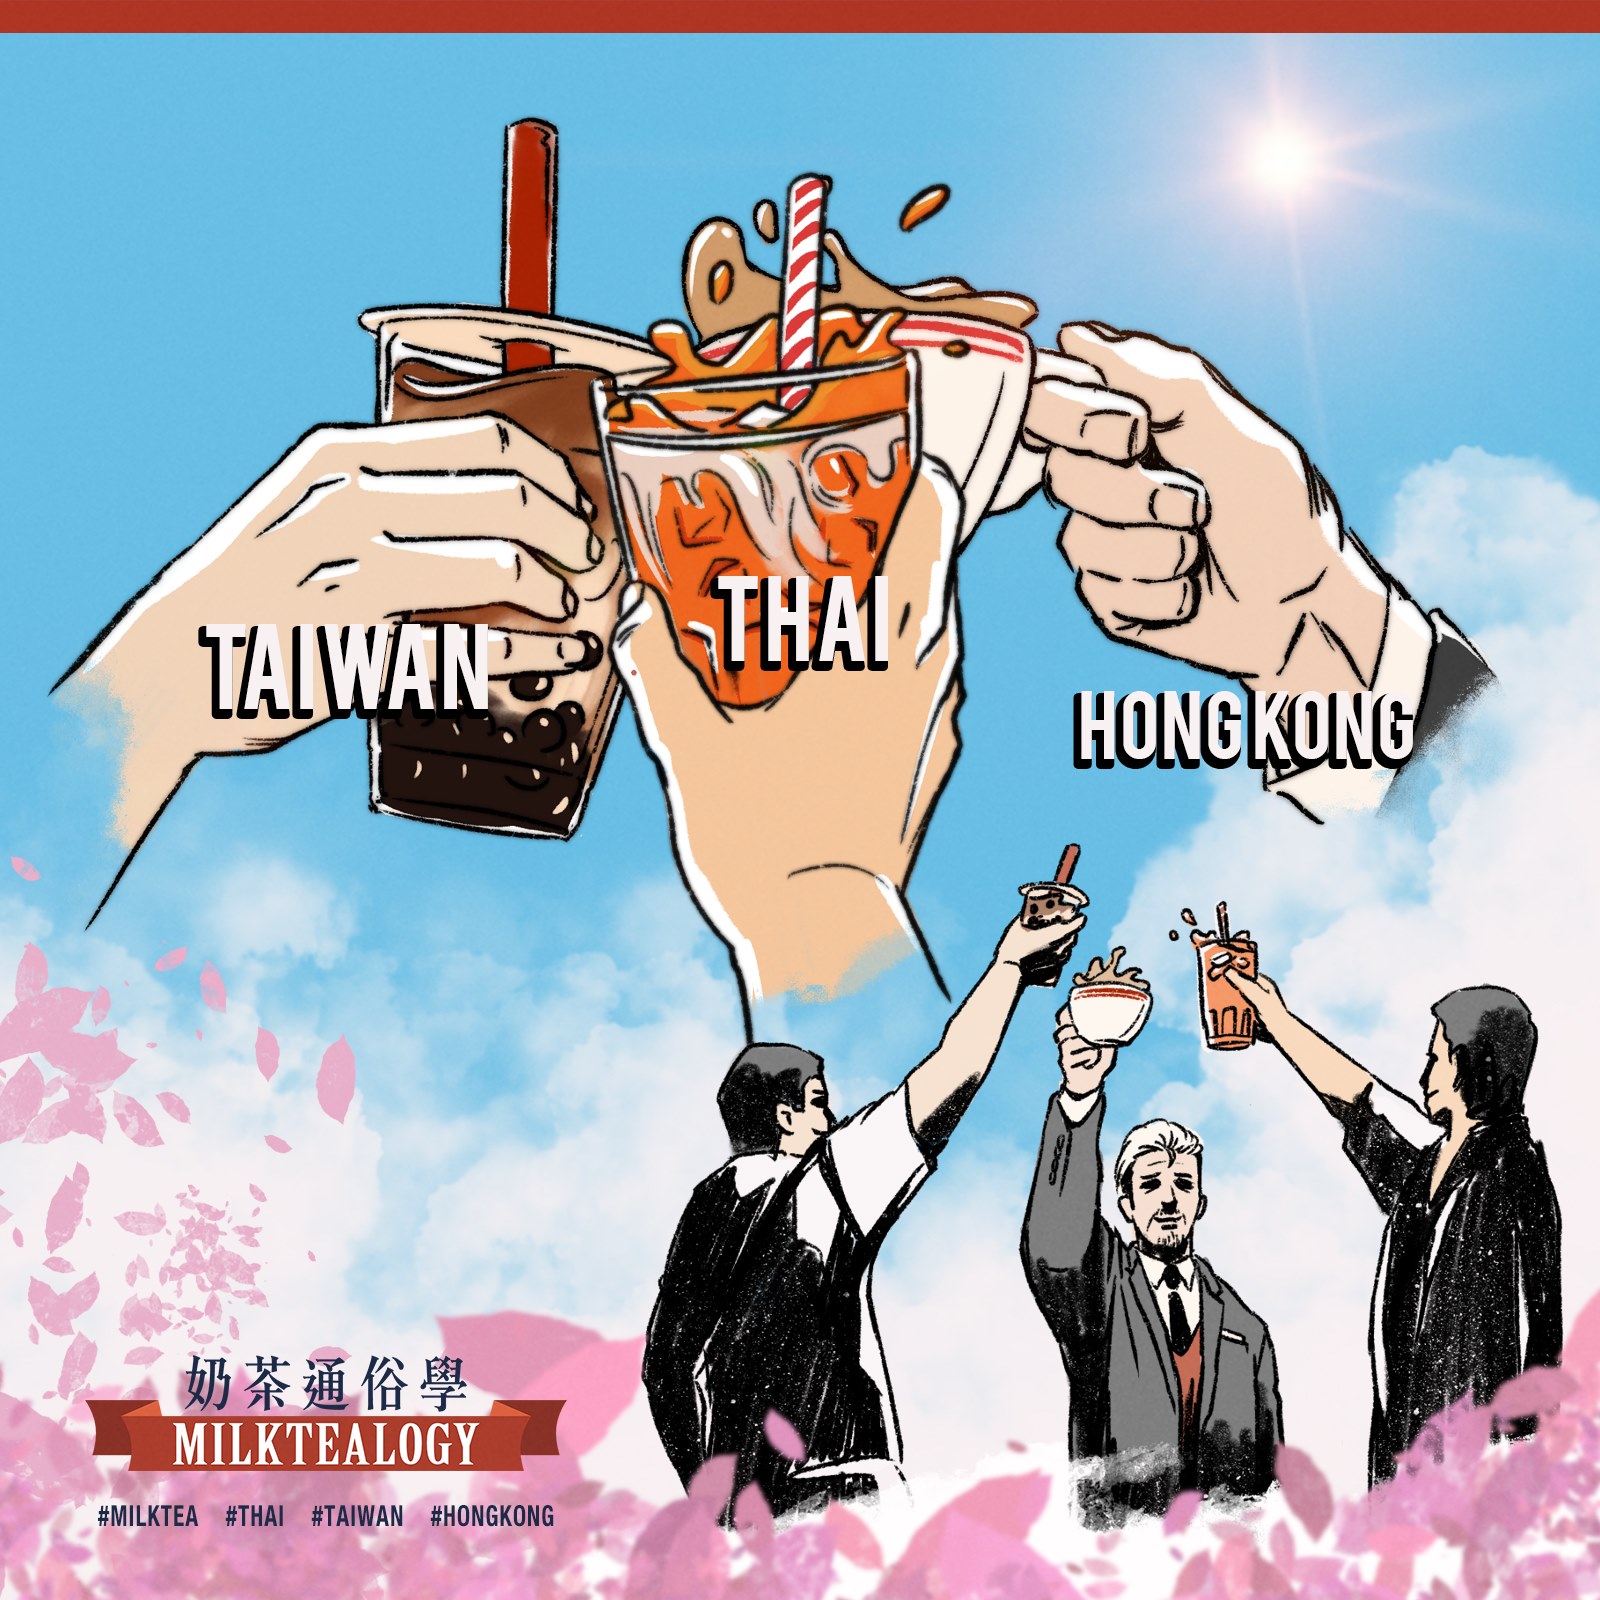 Milk Tea Alliance meme. (Twitter, @khunprinx illustration)